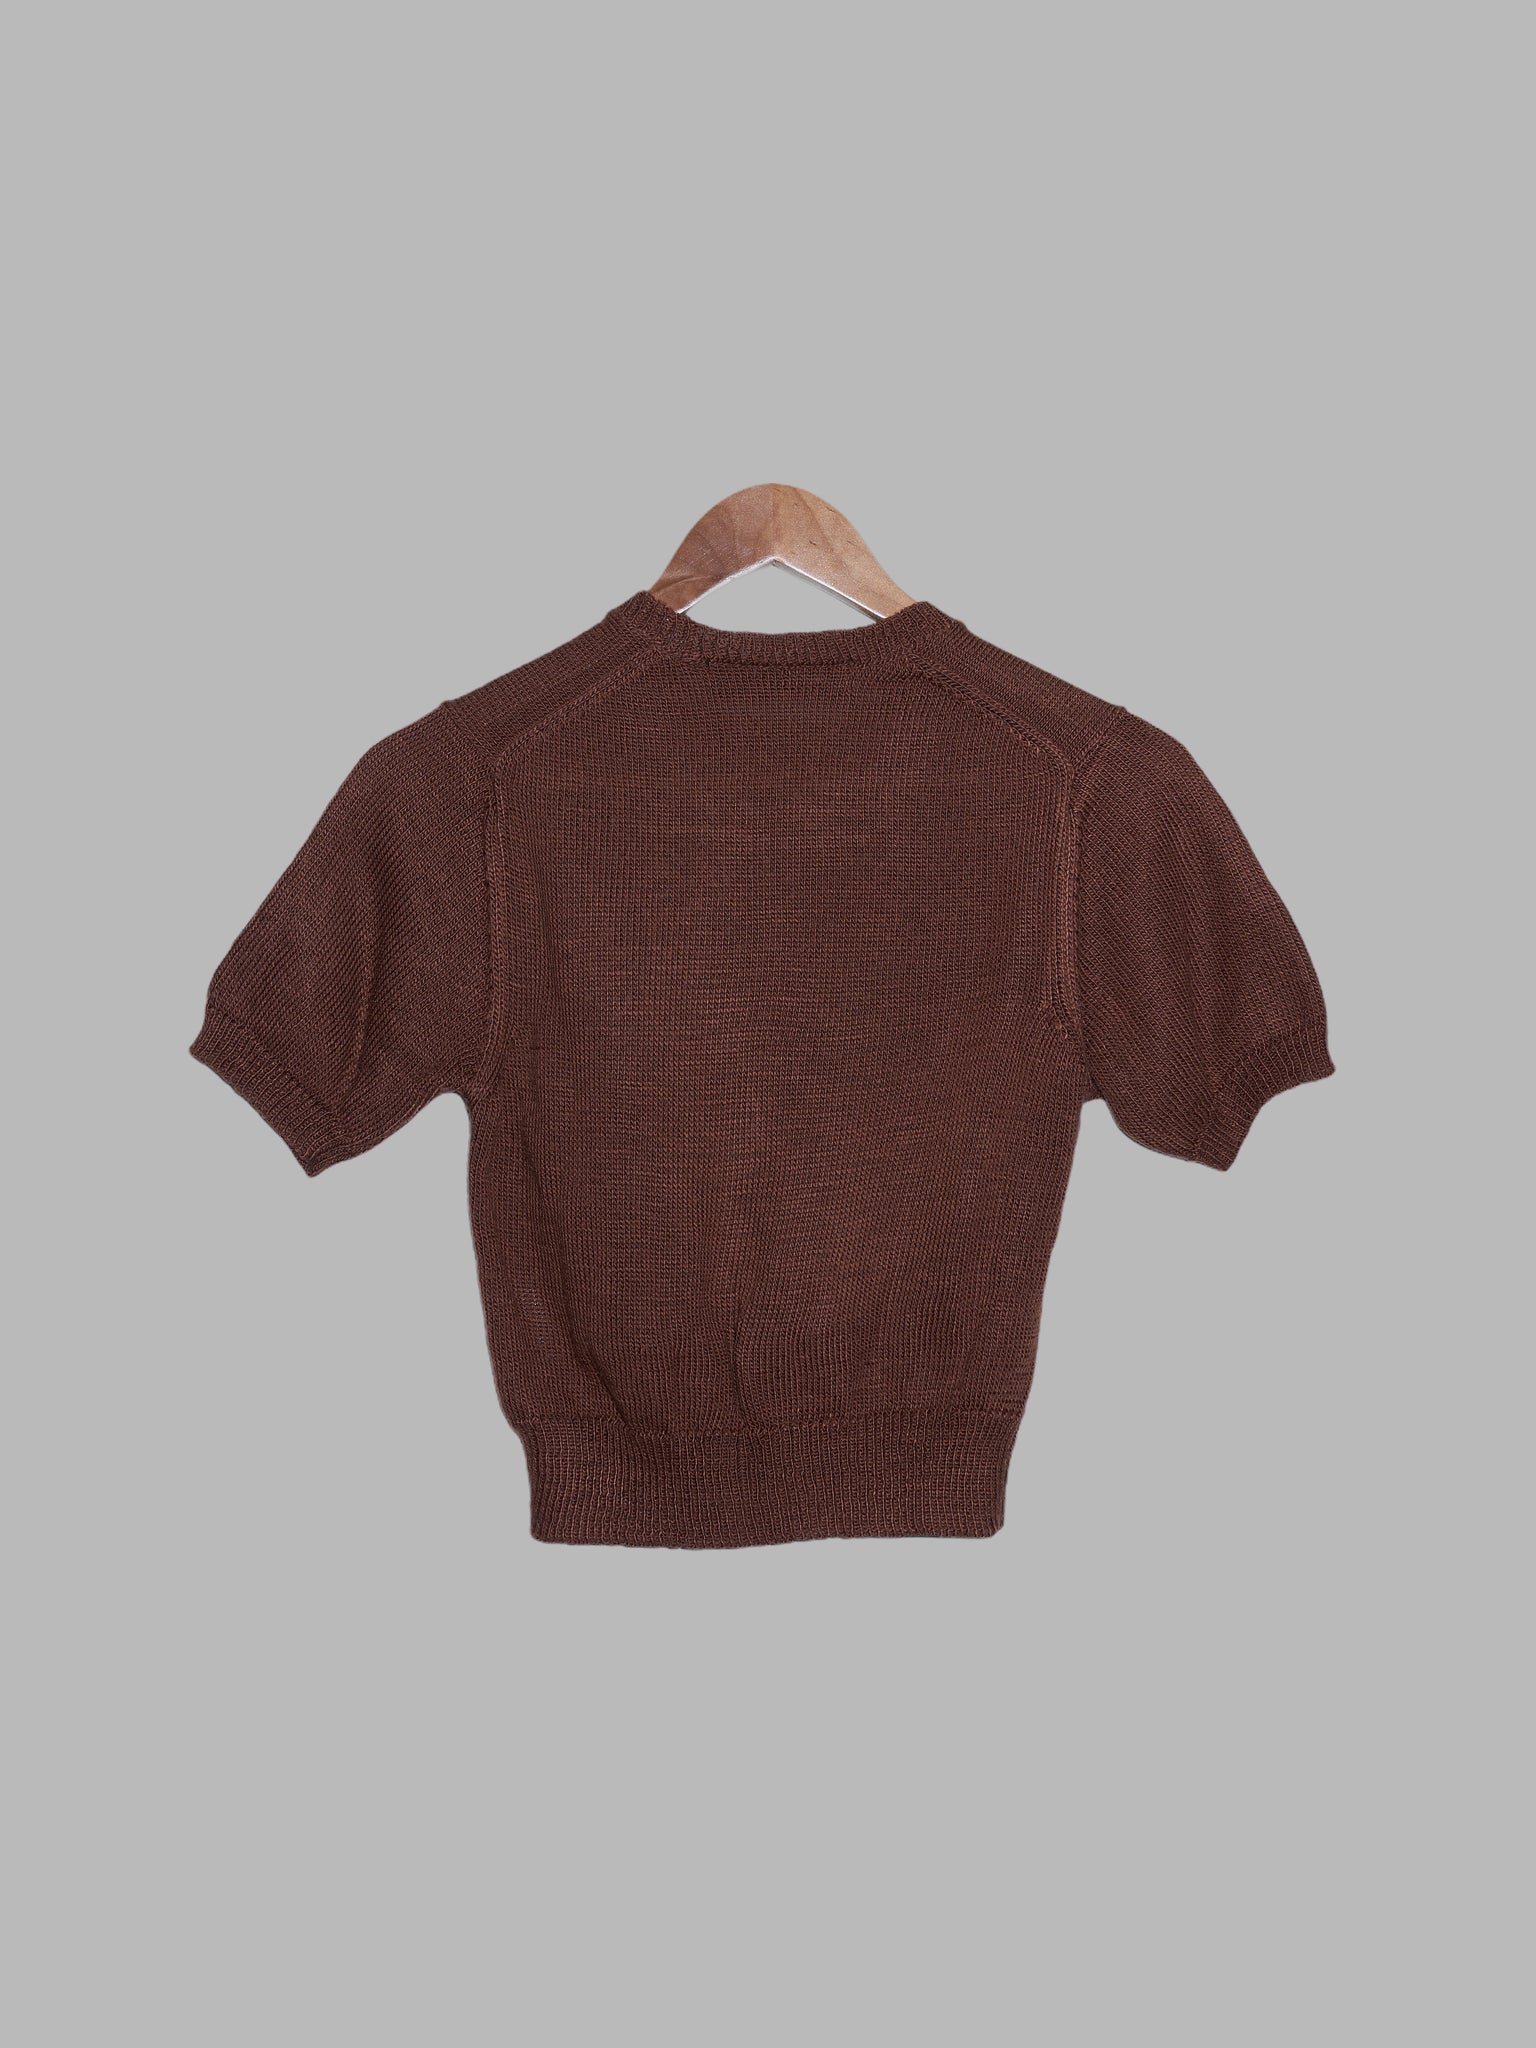 Comme des Garcons Noir 1995 brown acrylic short sleeve sweater